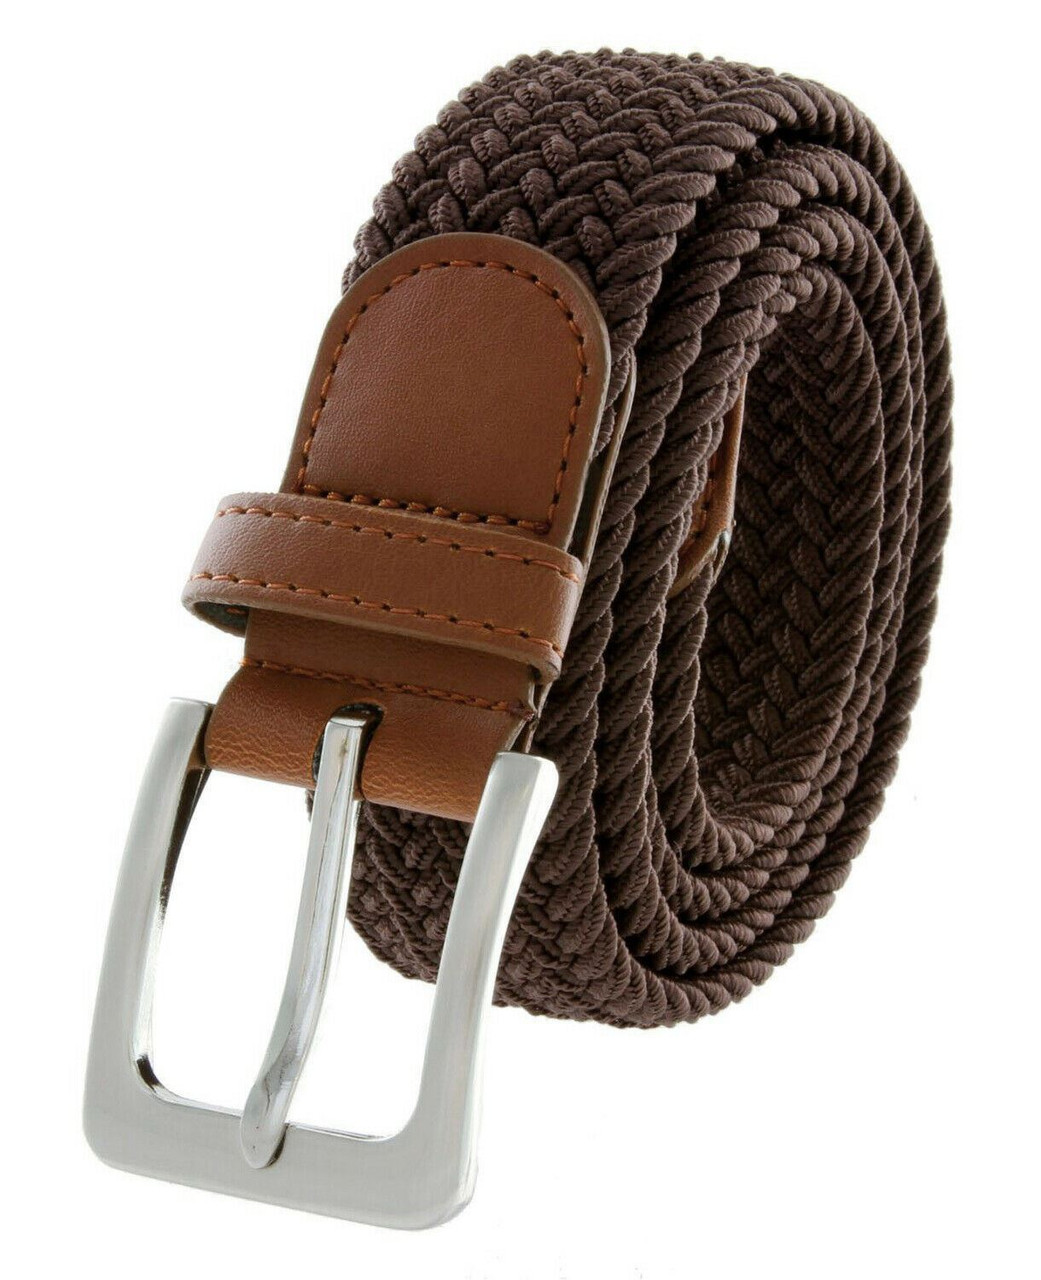 Buy Woomcraft Men's Leather Braided Belt (Tan) at